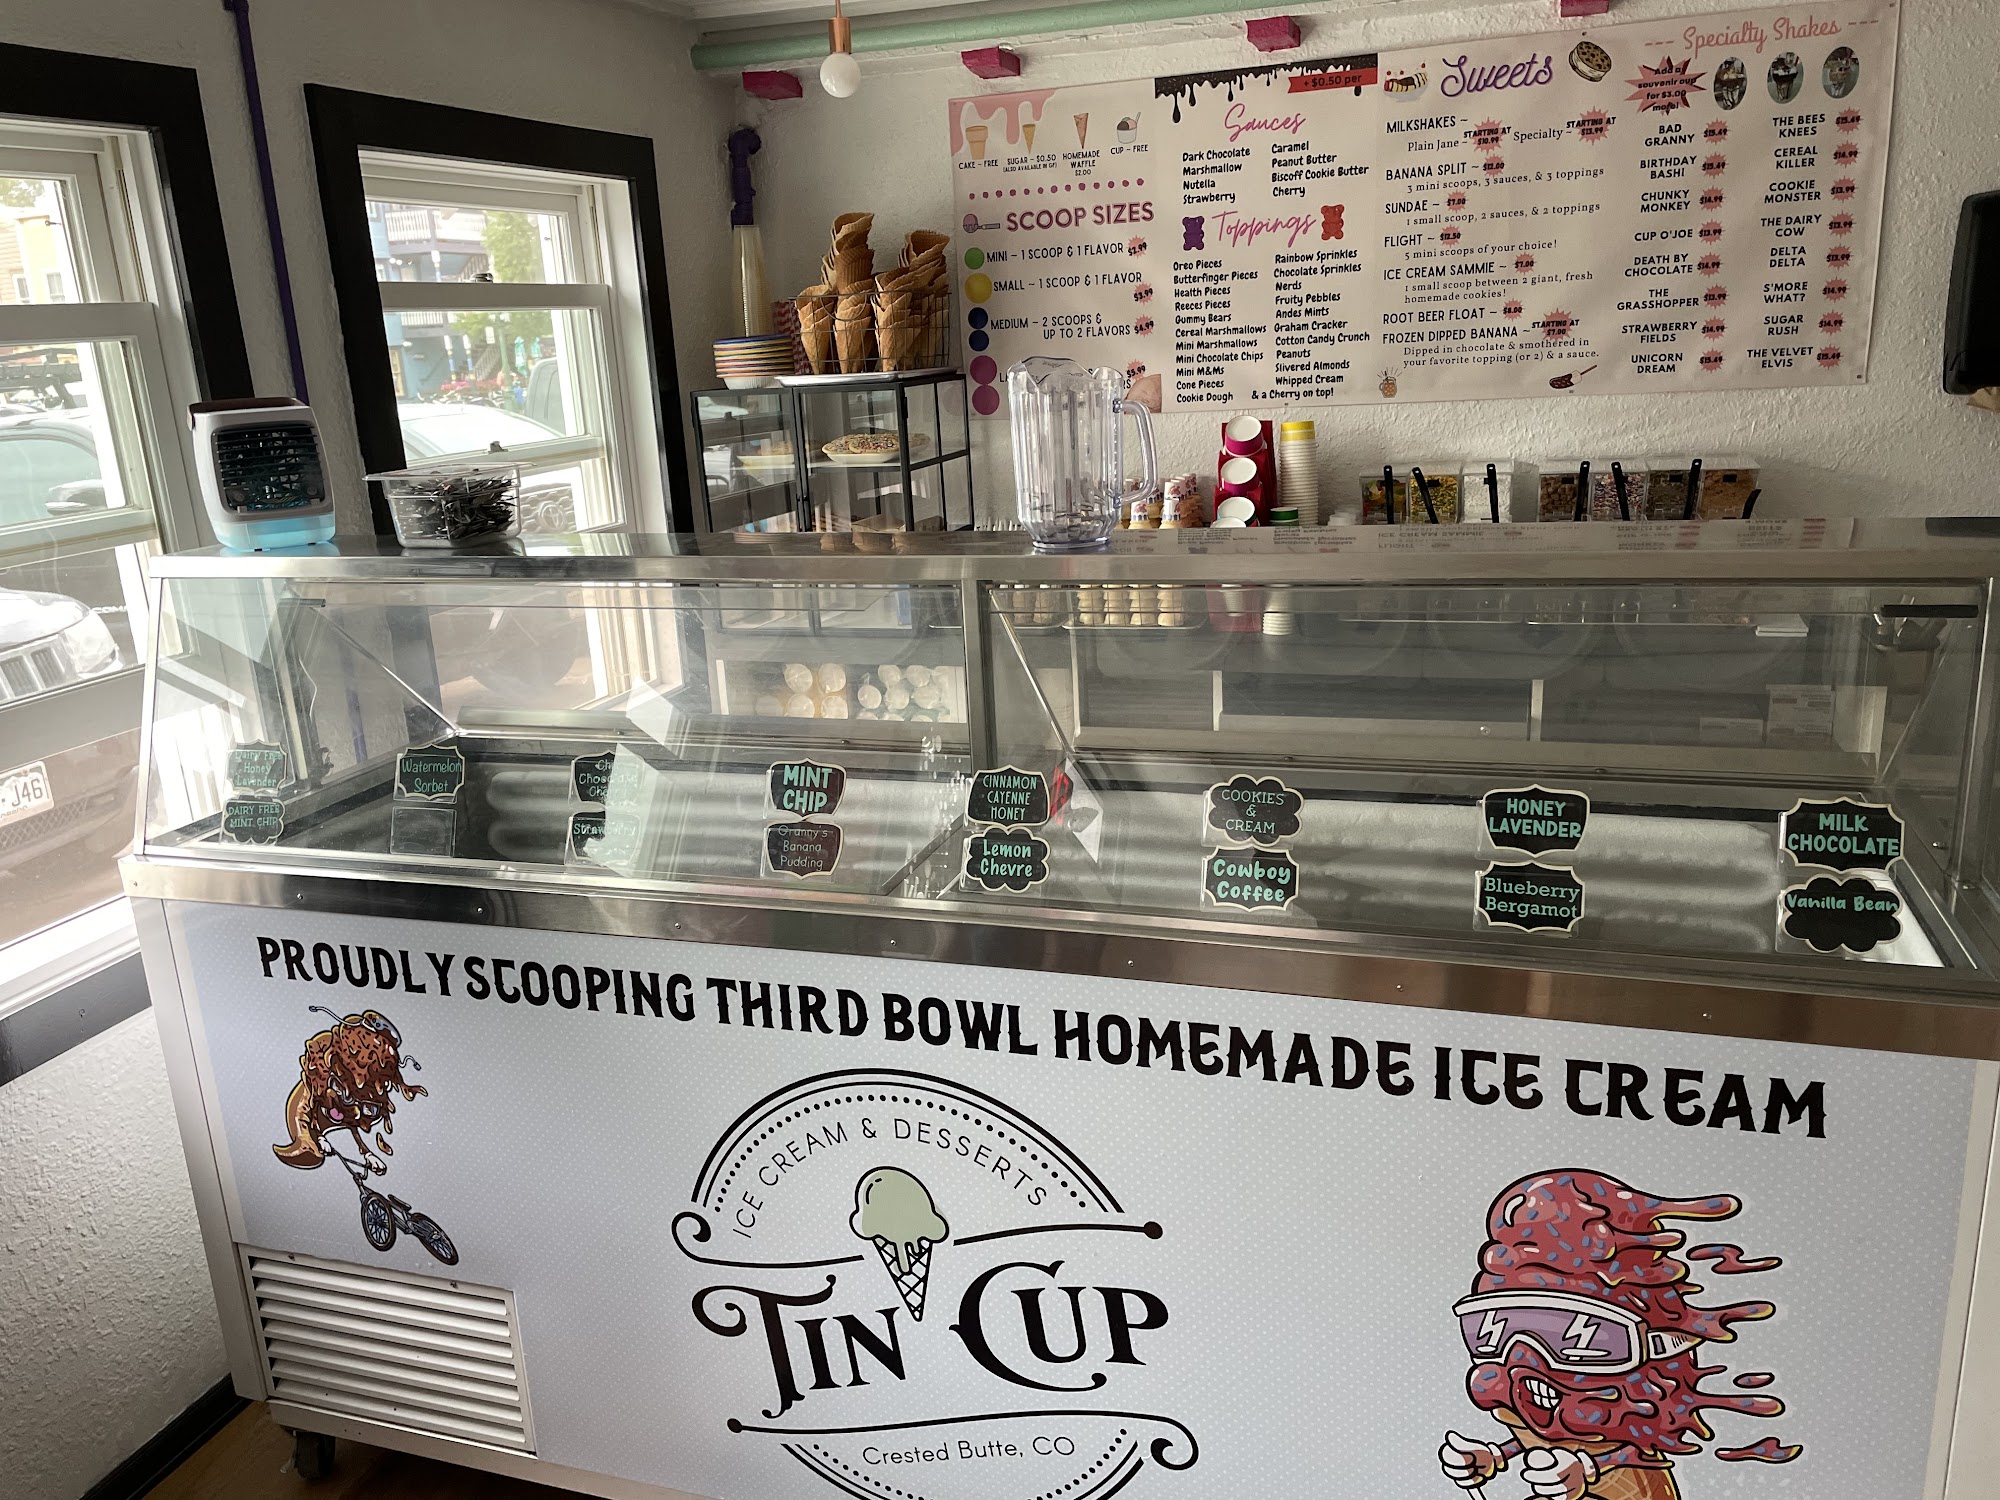 Tin Cup Ice Cream & Desserts